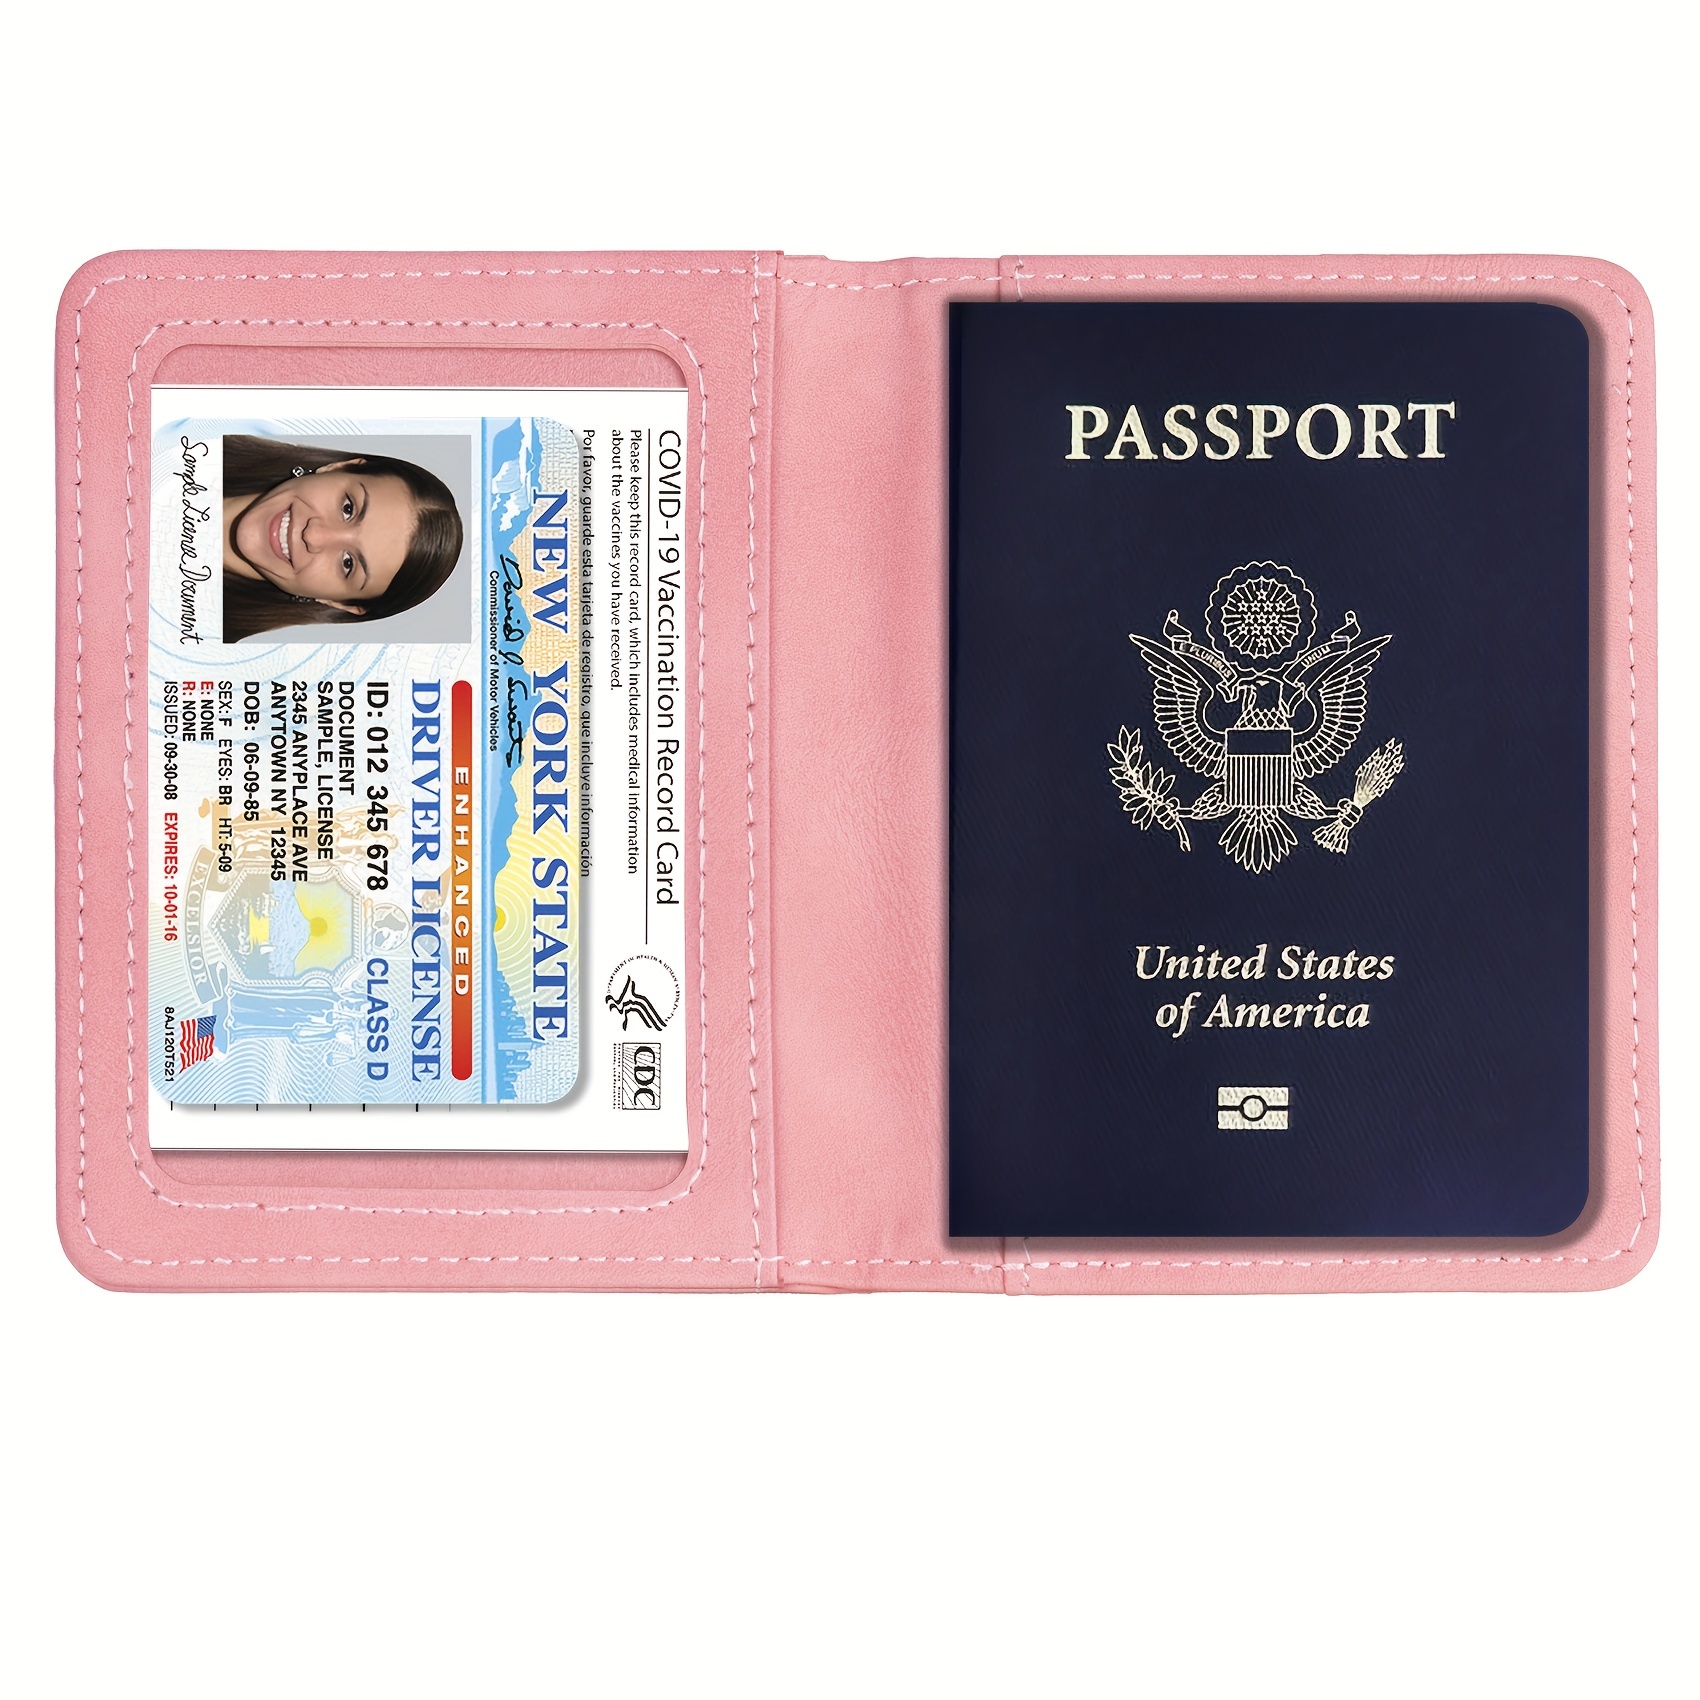 RFID Blocking Vaccine Card Passport Wallet | Royce New York